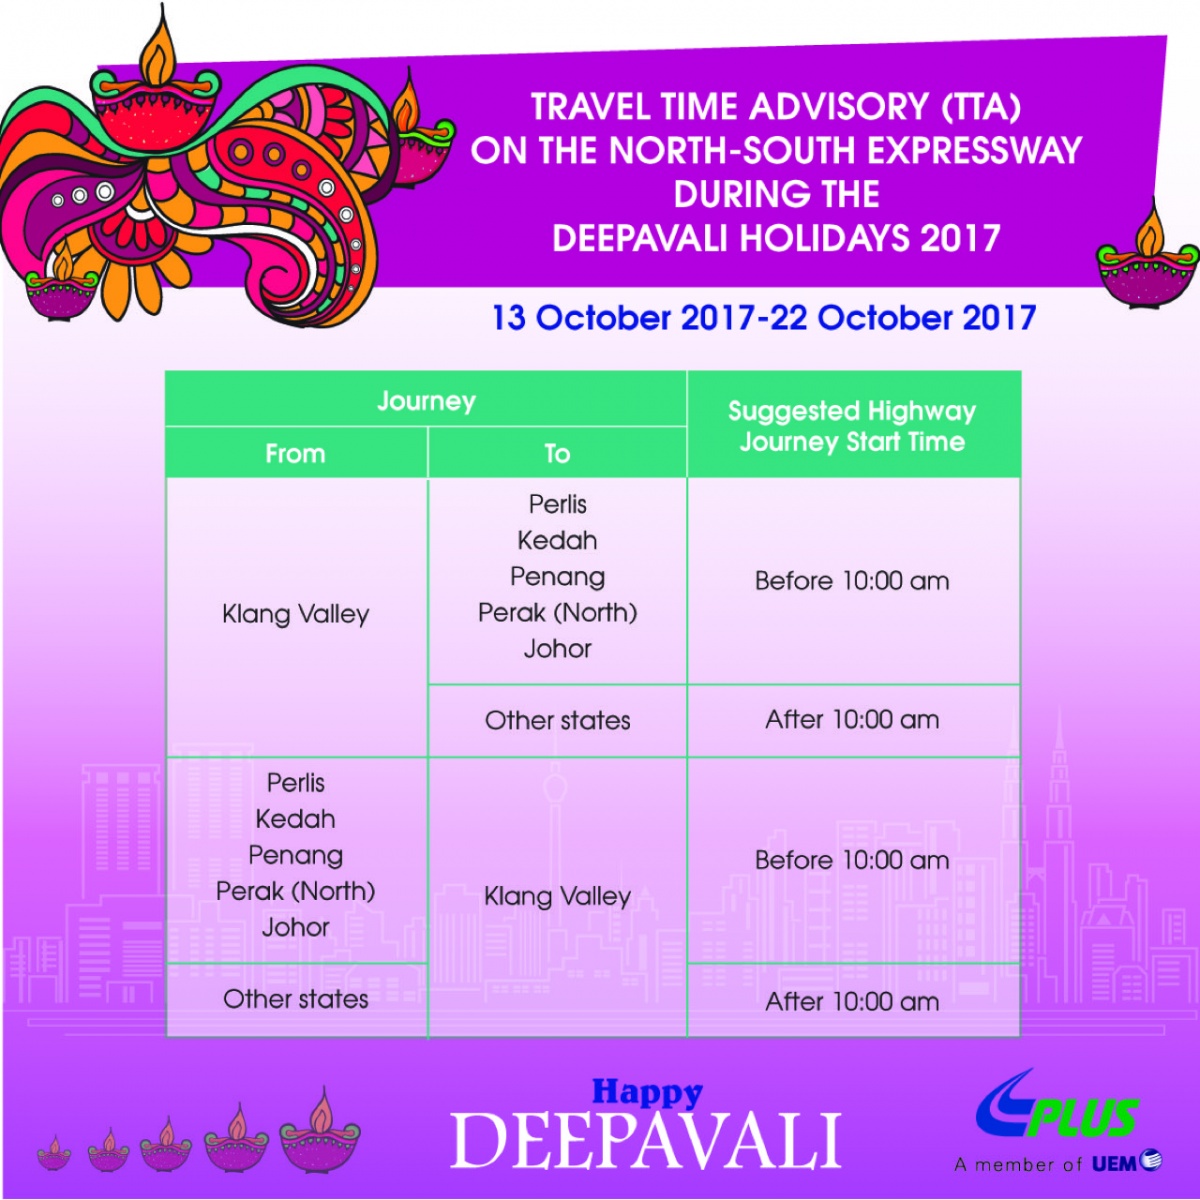 plus-offering-up-to-20-toll-rebate-for-deepavali-tta-deepavali-2017-02